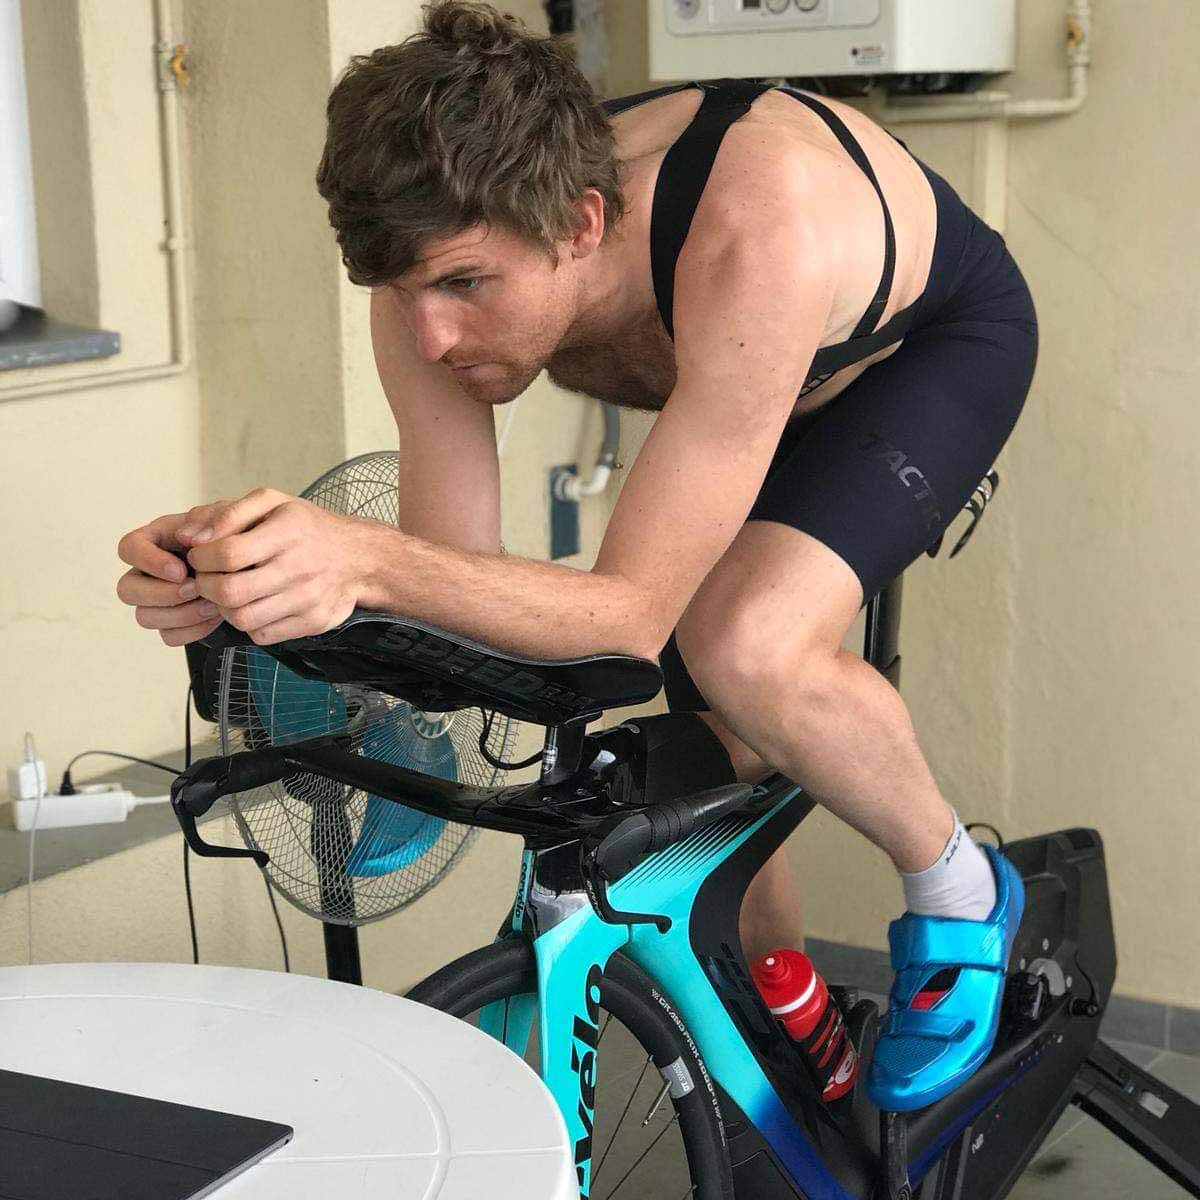 HOKA athlete David McNamee on the exercise bike